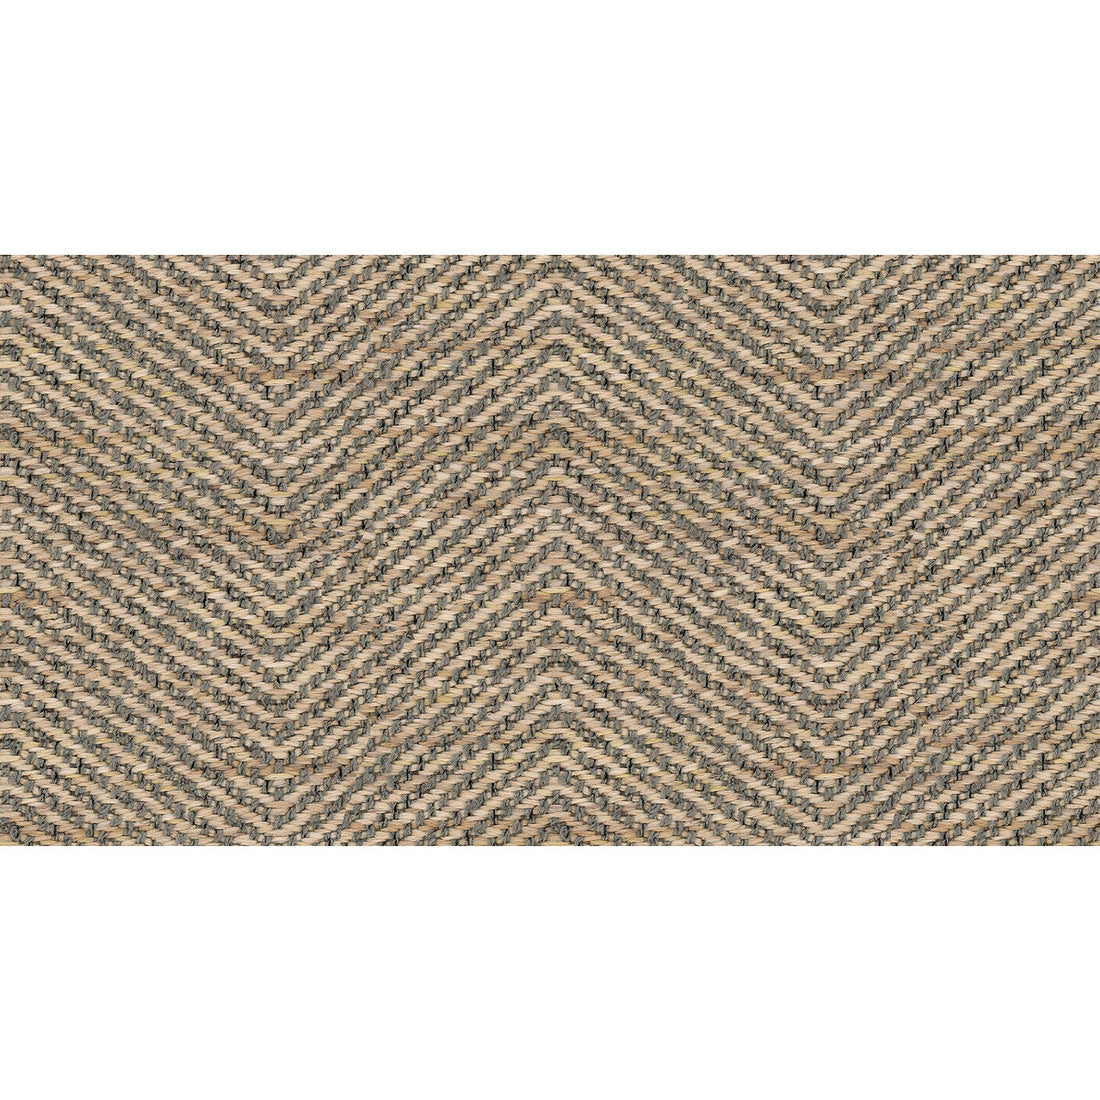 Kravet Smart fabric in 33039-1615 color - pattern 33039.1615.0 - by Kravet Smart